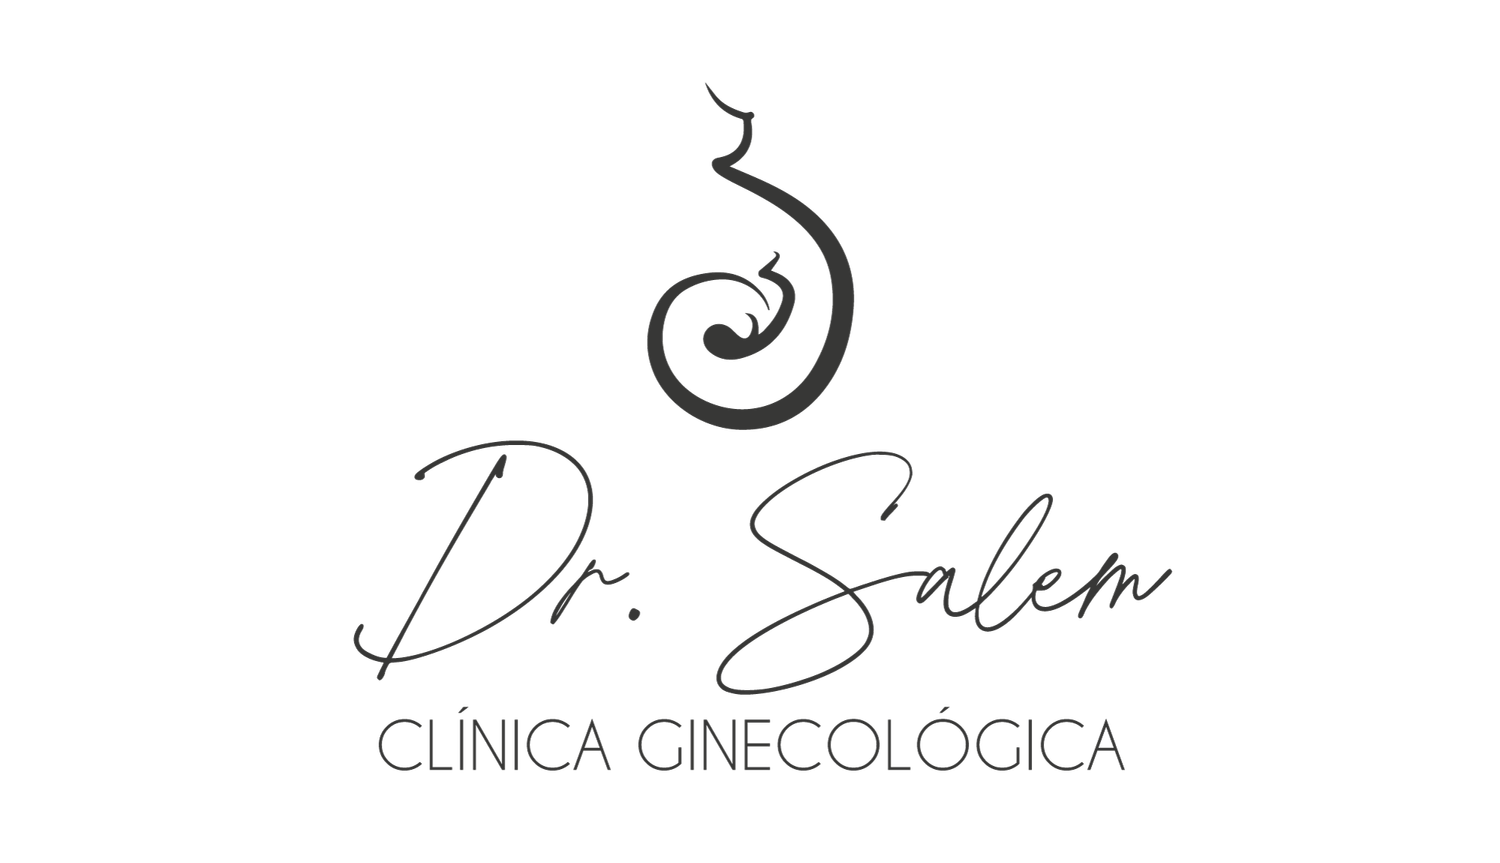 Clínica Ginecológica Dr. Salem